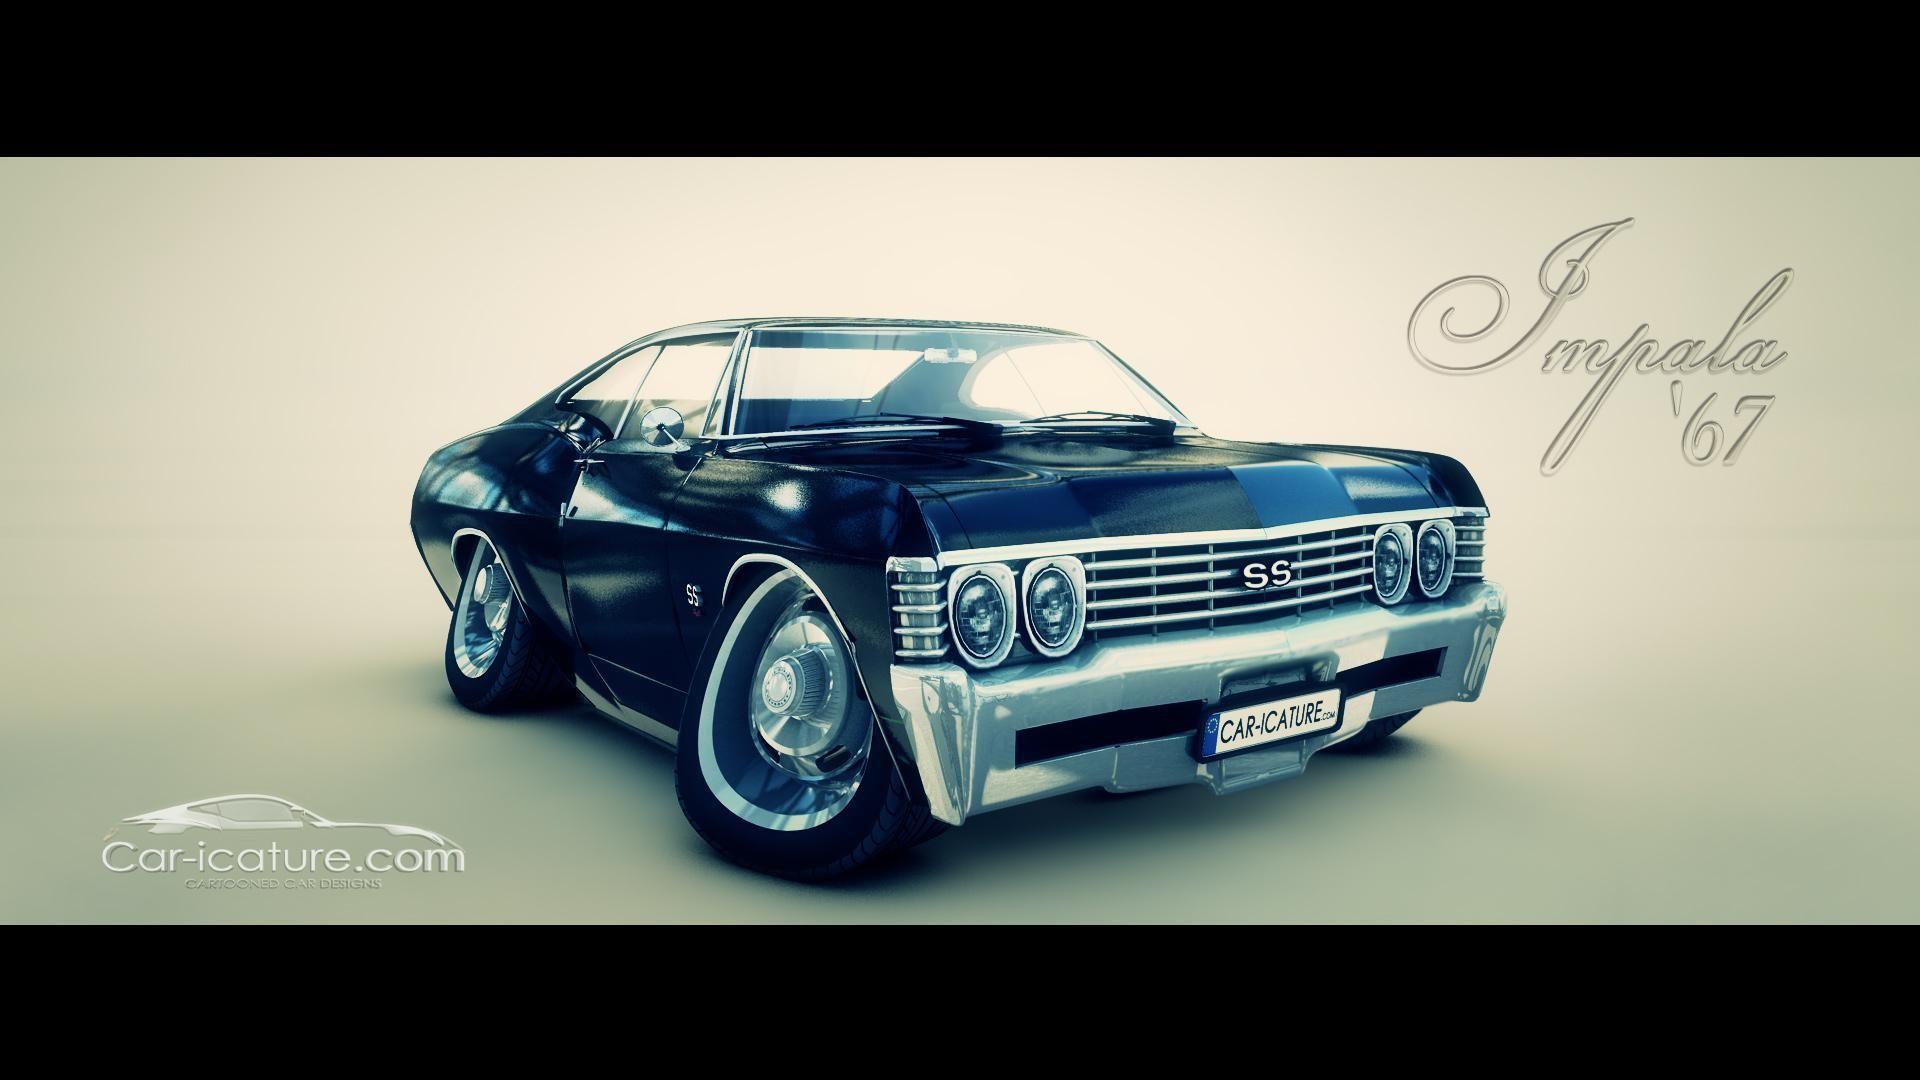 Chevy Impala HD desktop wallpaper, Widescreen, High